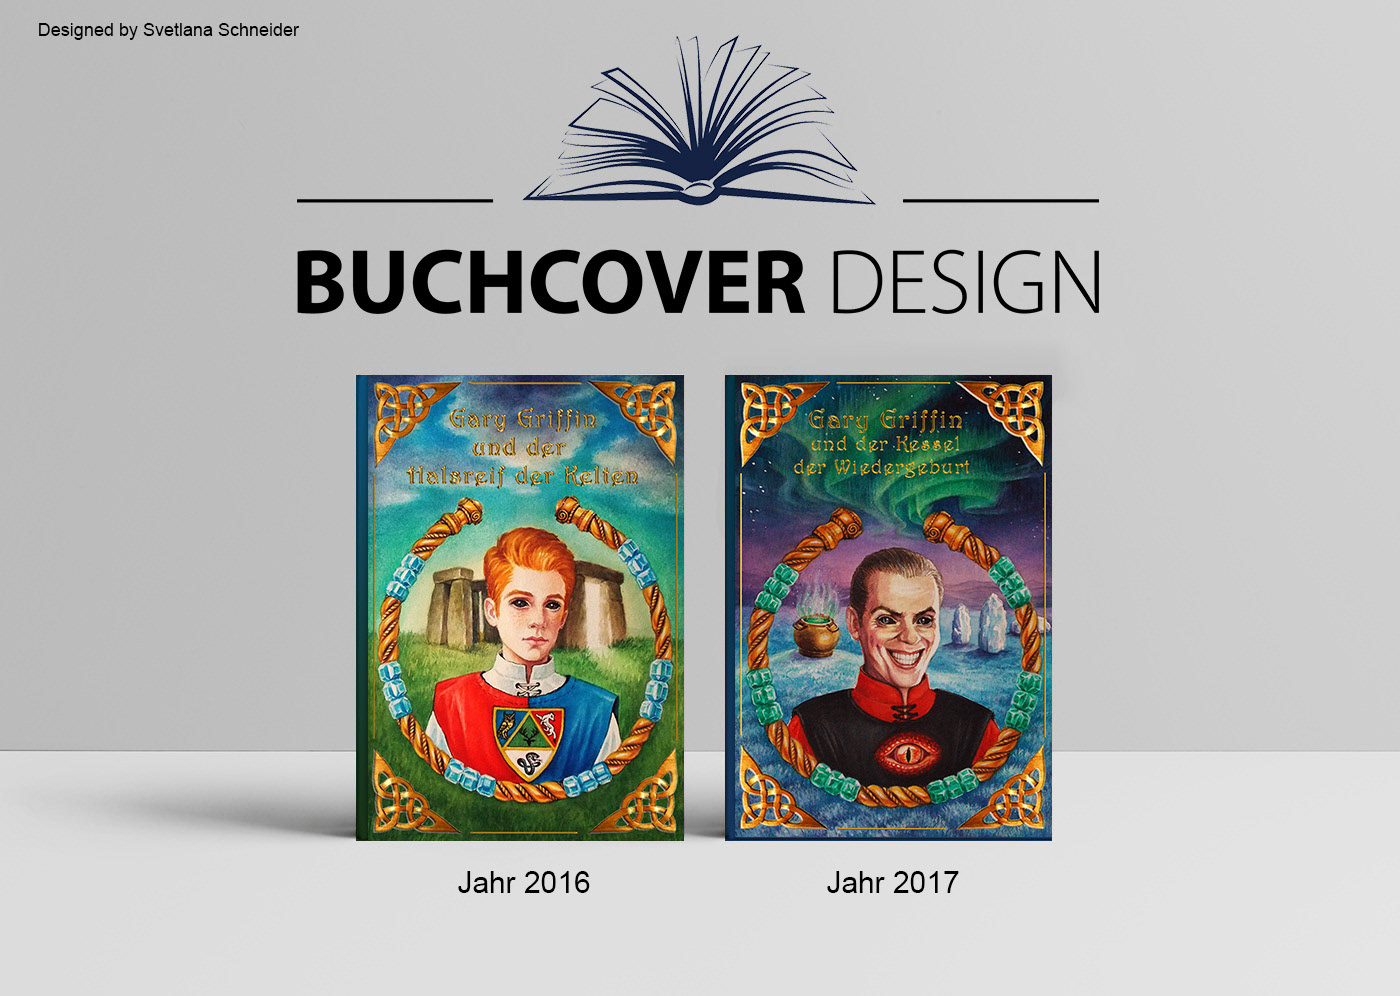 Buchcover Design - Designed by Svetlana Schneider